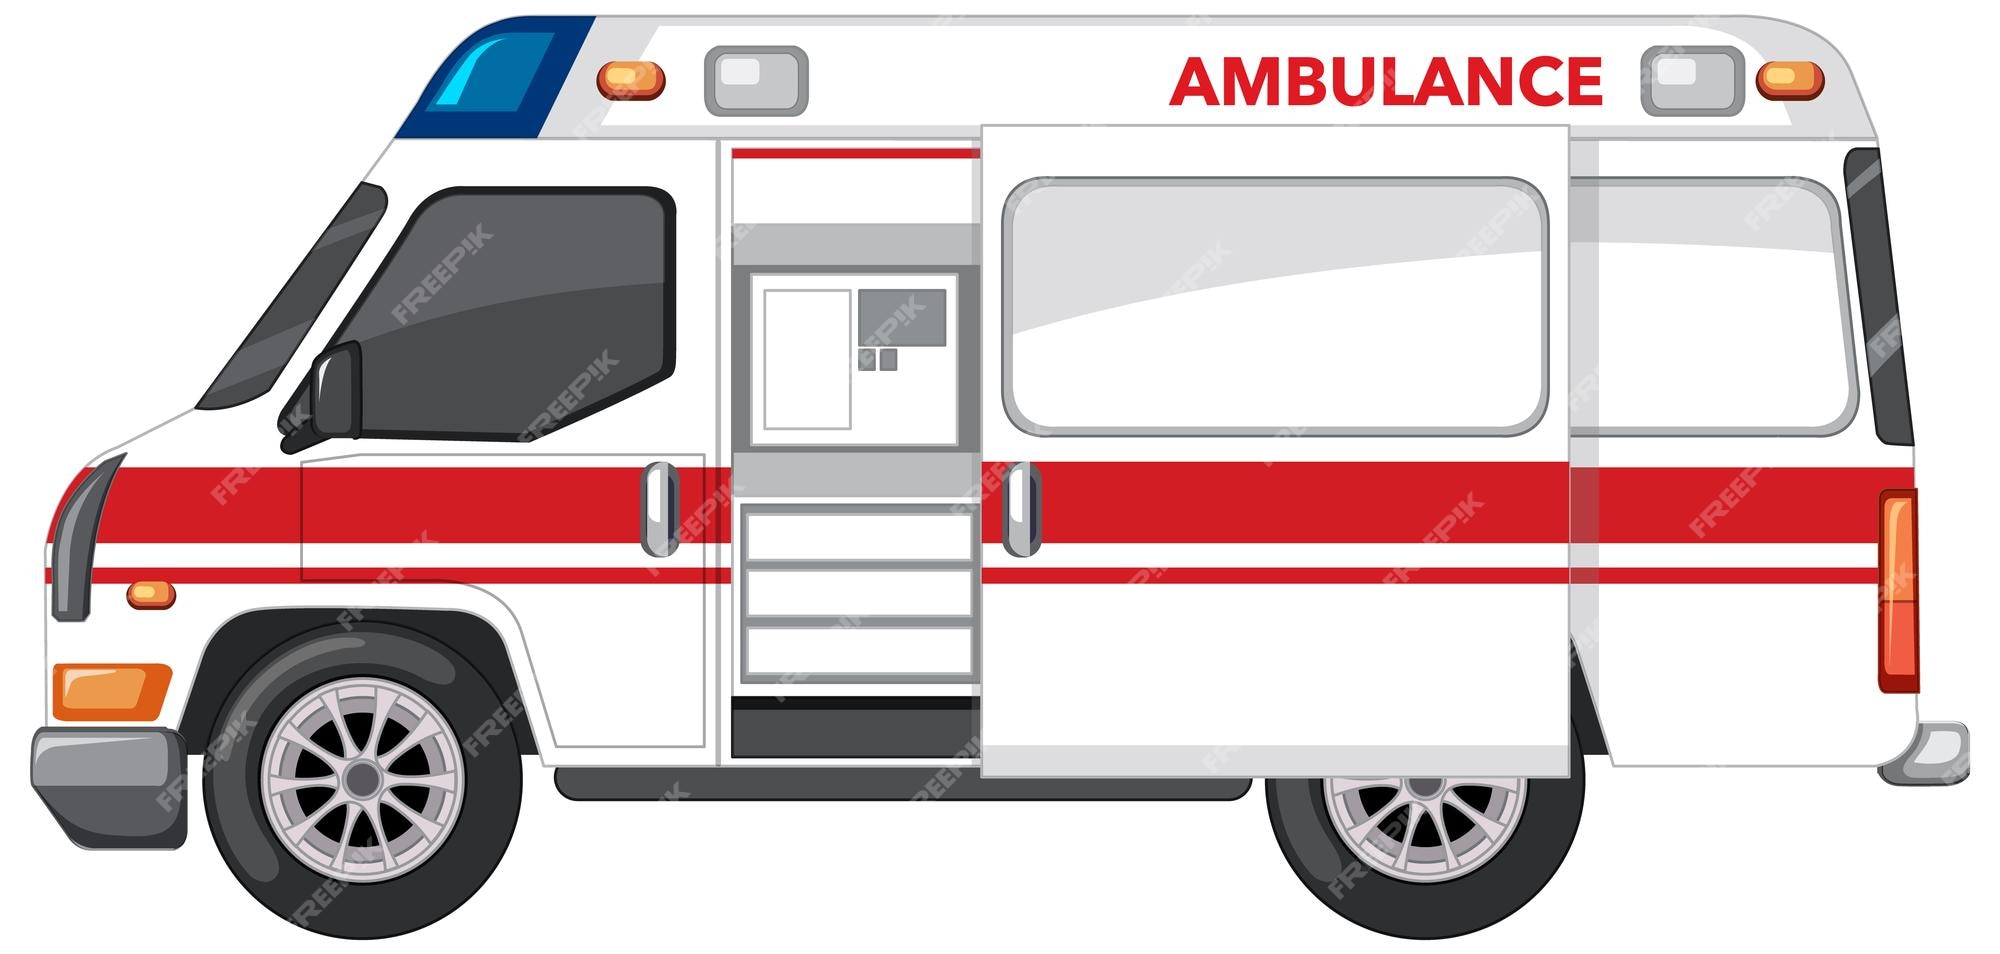 Ambulance cartoon Images | Free Vectors, Stock Photos & PSD